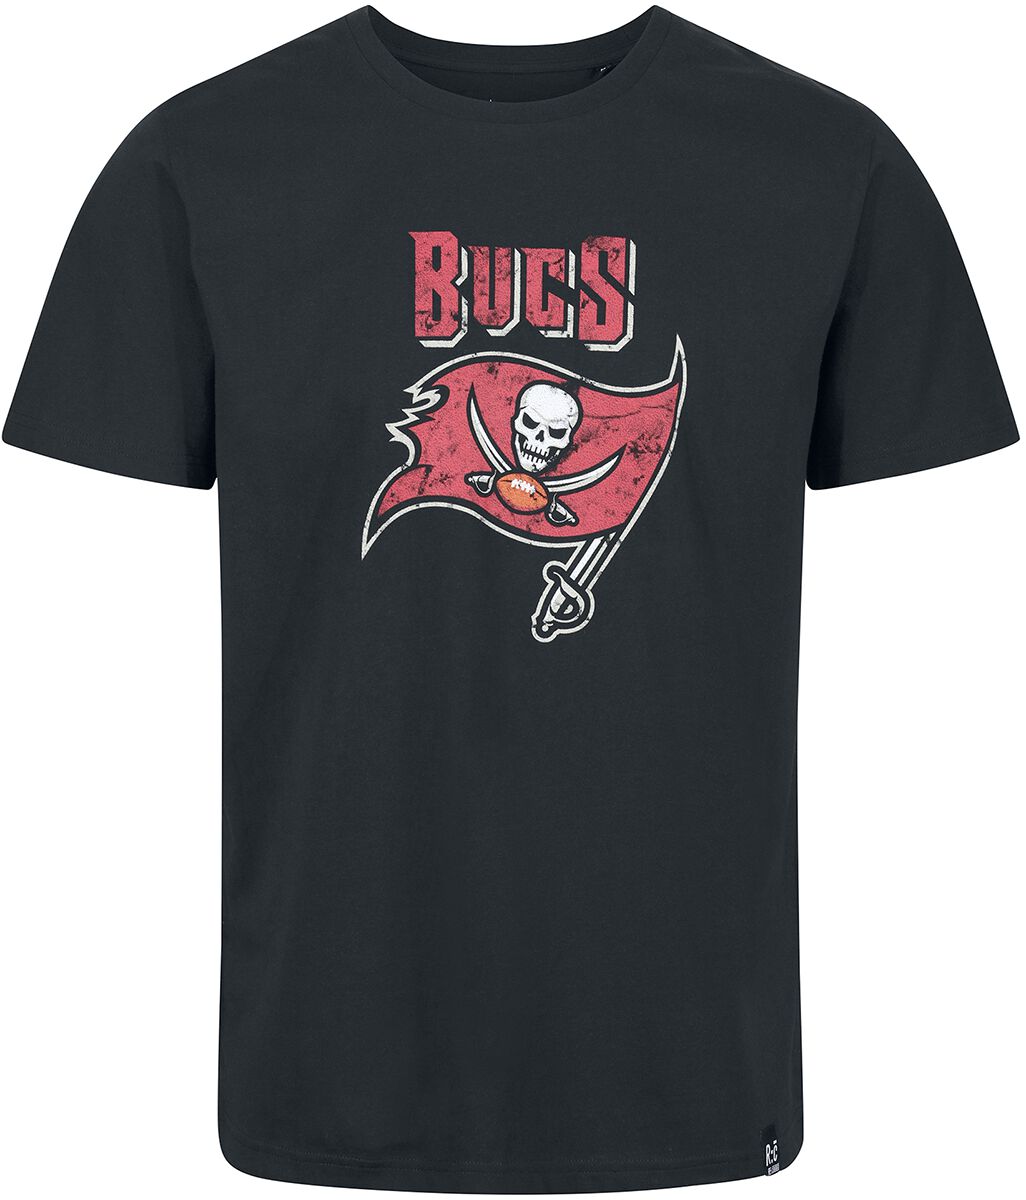 NFL NFL BUCCS LOGO T-Shirt schwarz in M